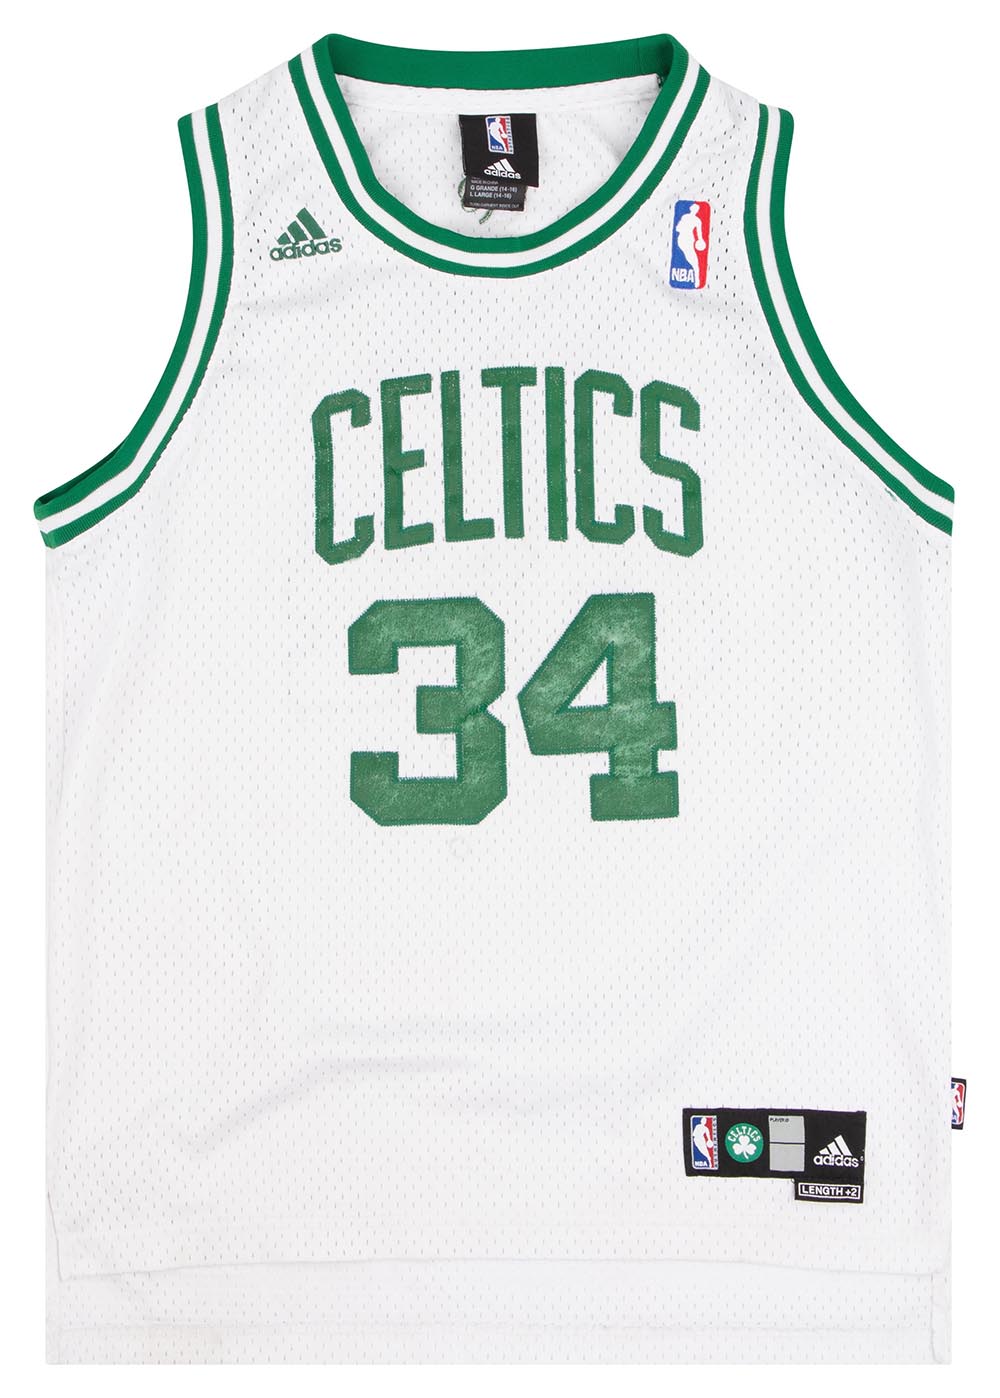 Nike Celtics Paul Pierce Jersey Size L Youth 2000s Rondo Garnett Champions